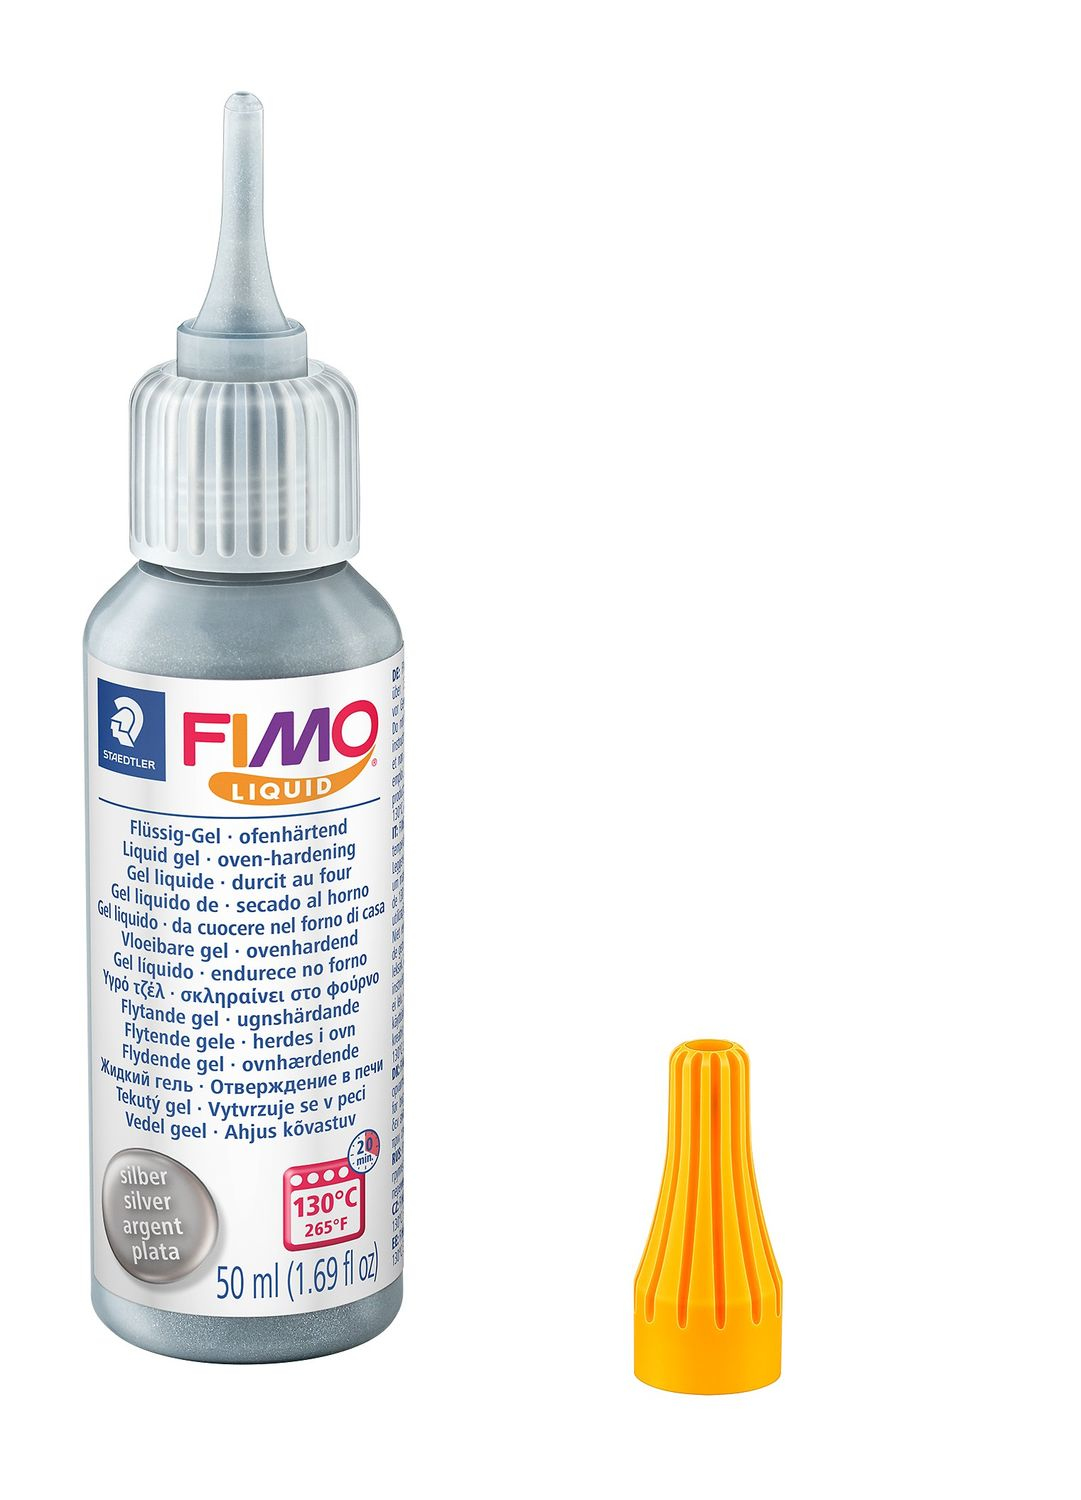 STAEDTLER FIMO 8050 - Dekorier-Gel - Silber - Erwachsene - 1 Stück(e) - 130 °C - 20 min